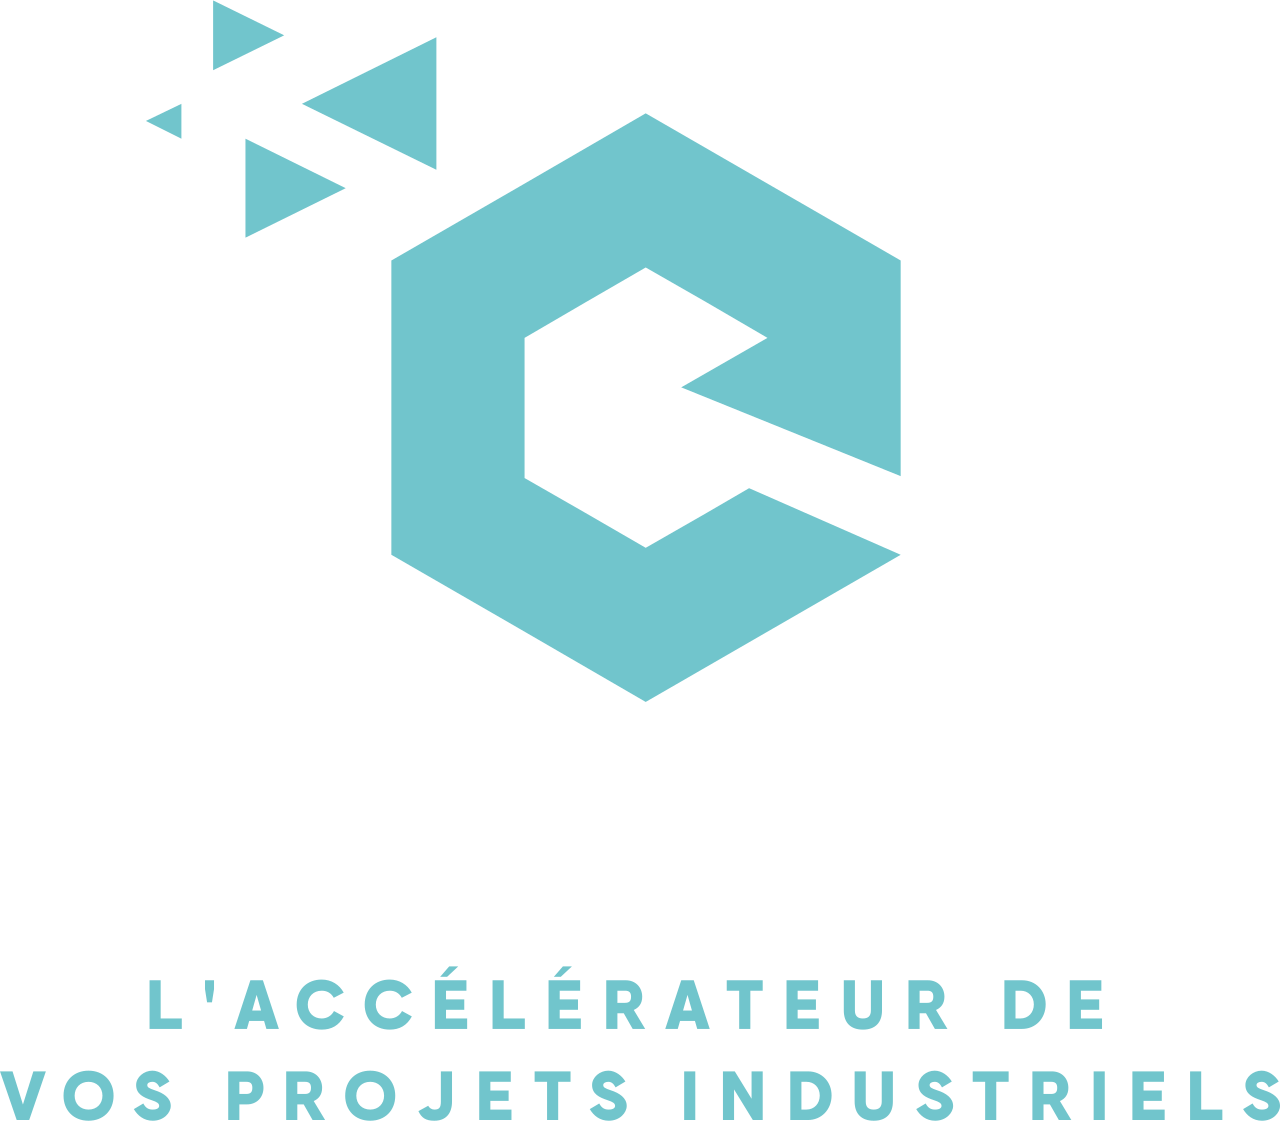 catalyst's logo